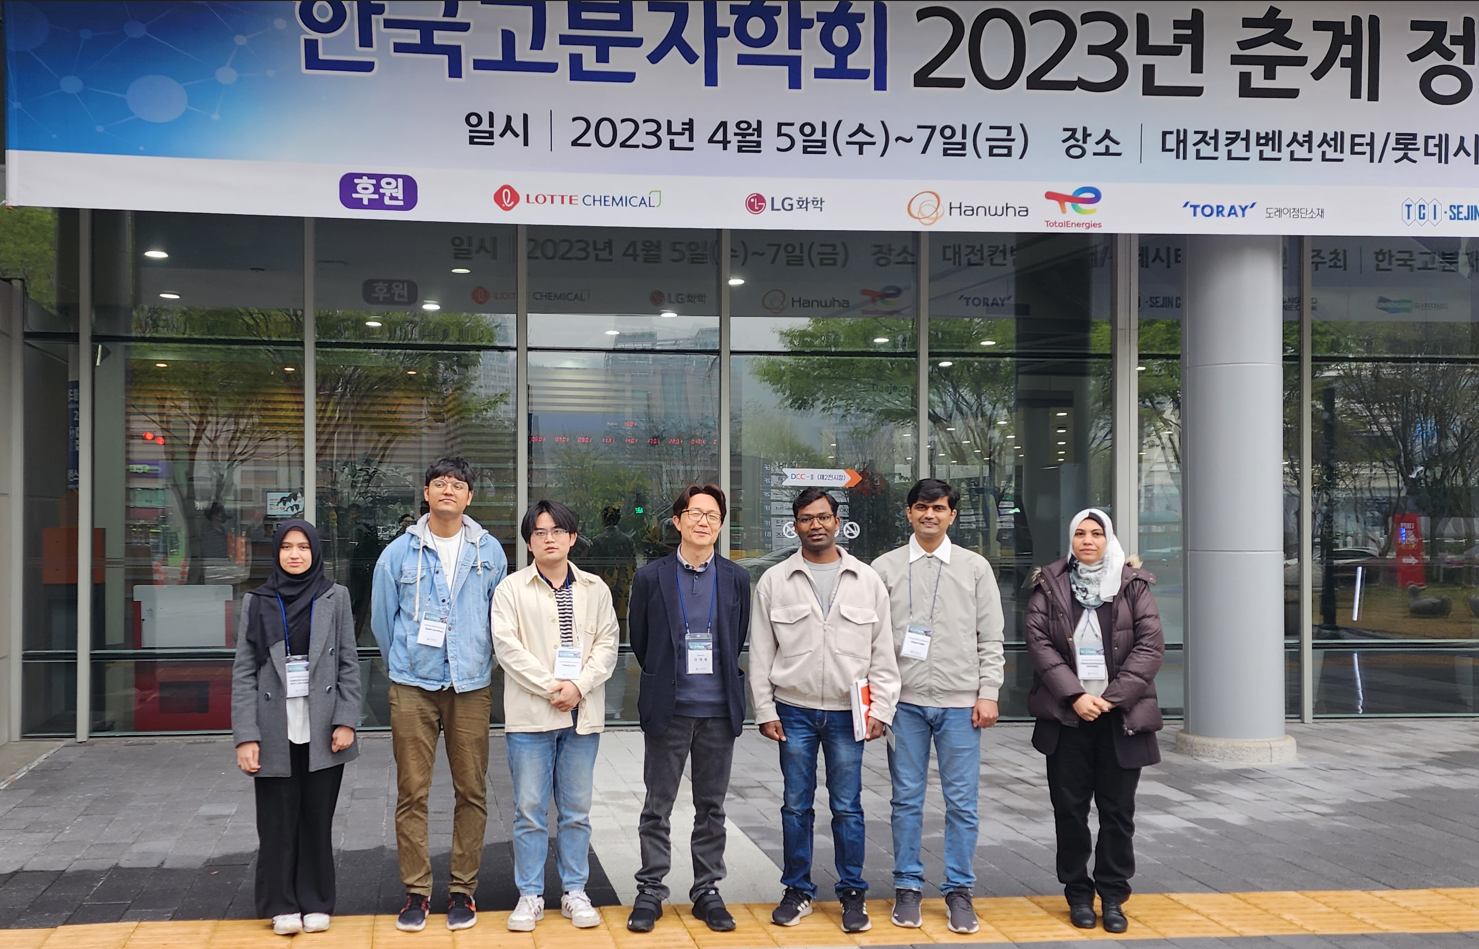 PSK 2023 Spring Meeting, Daejeon 대표이미지